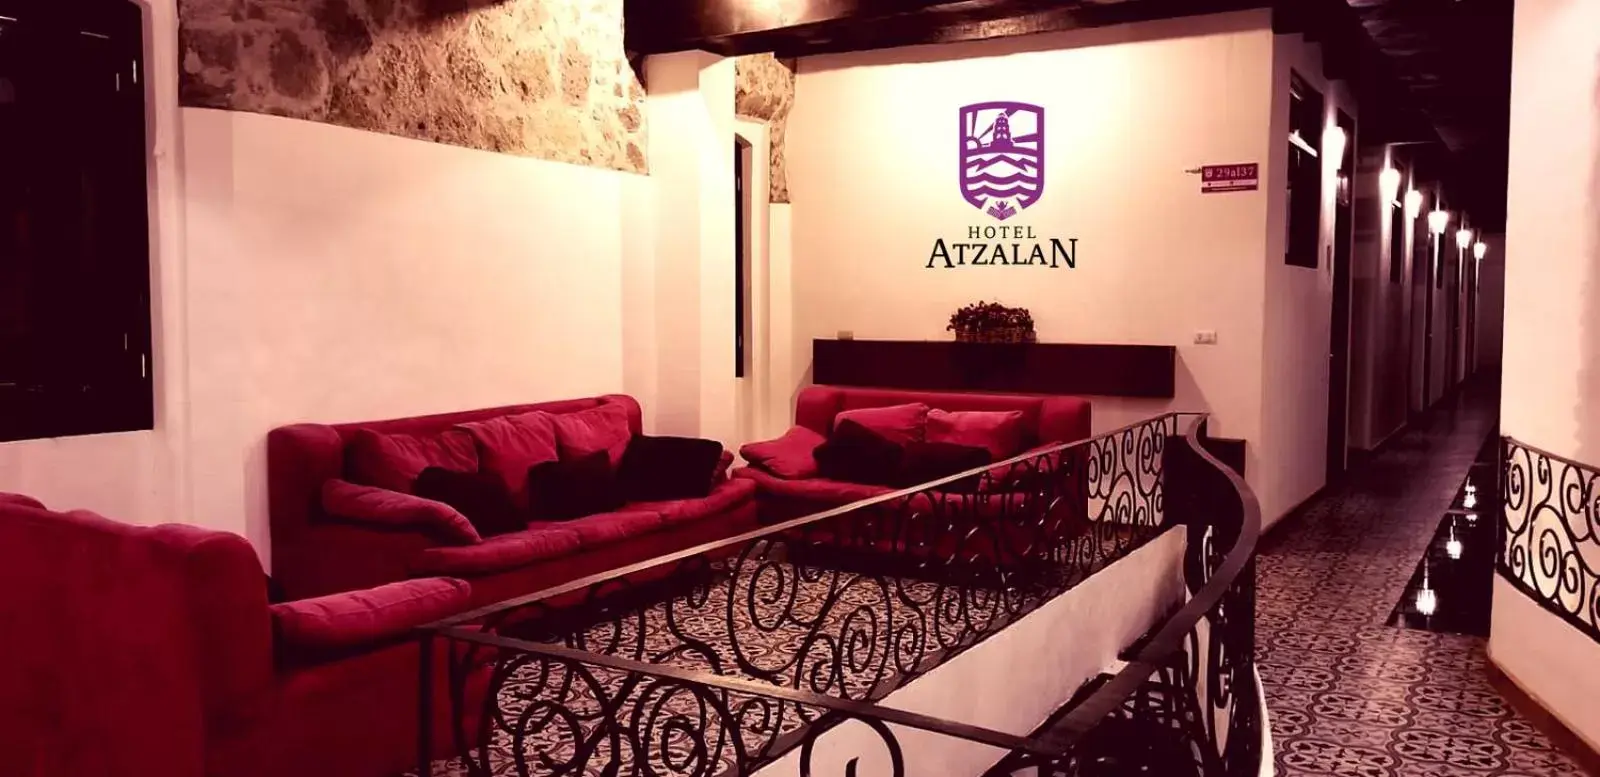 Hotel Atzalan